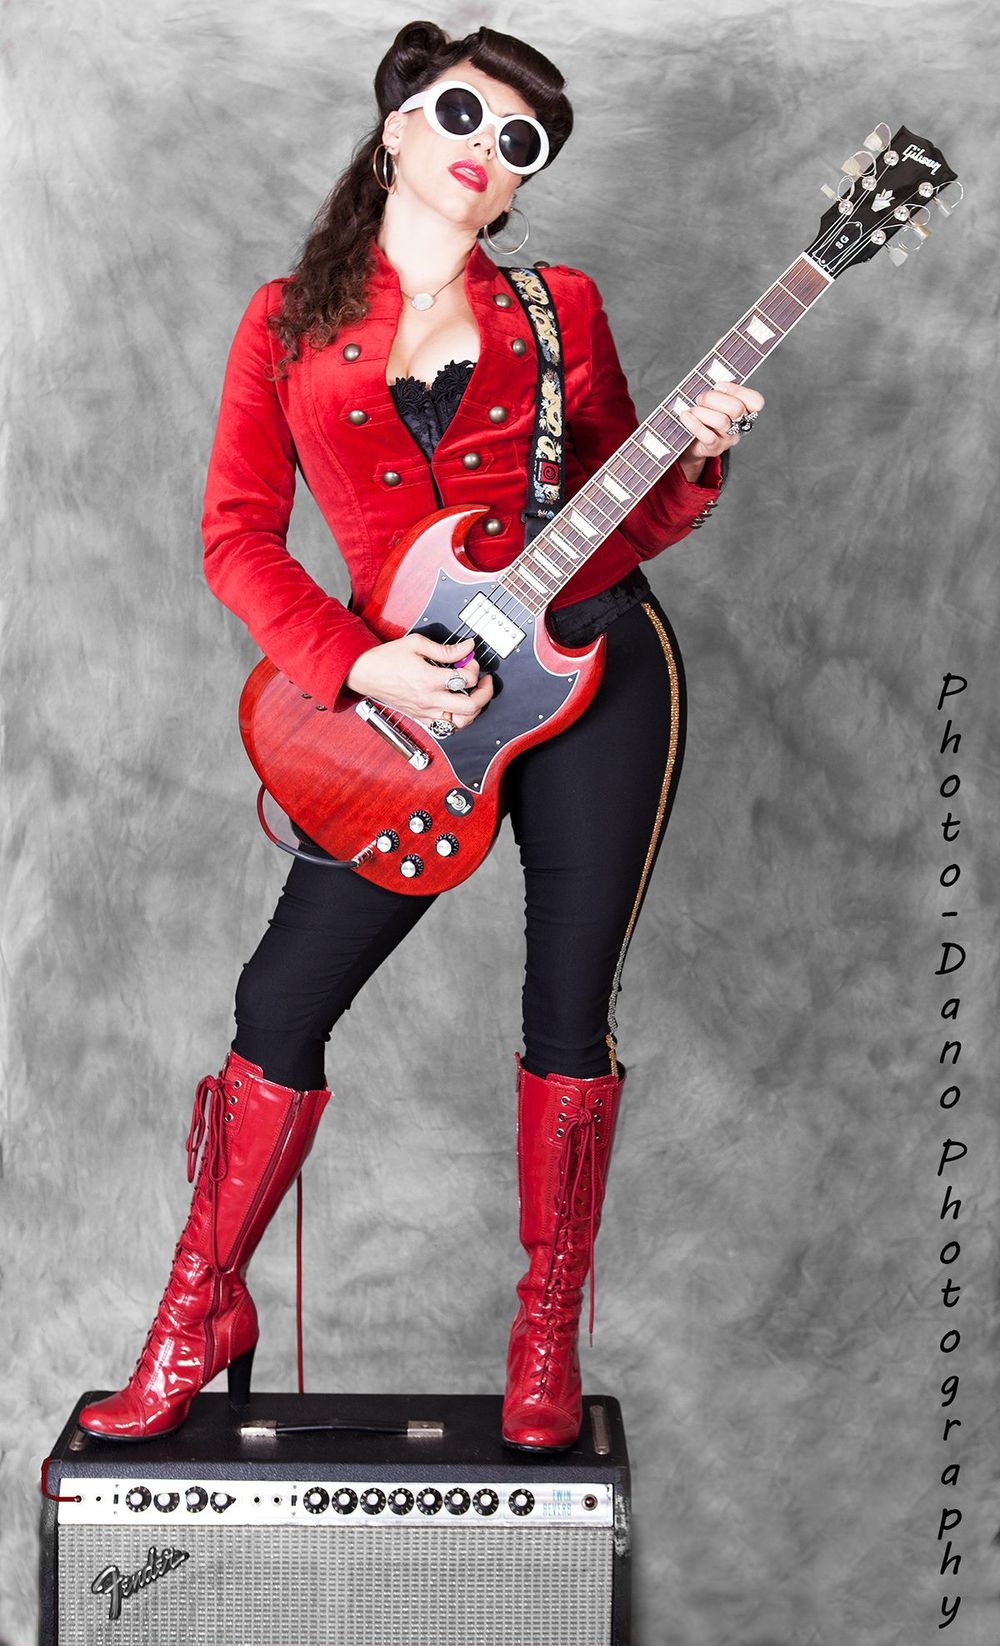 Pamela Parker Rock Artist, songwriter, producer